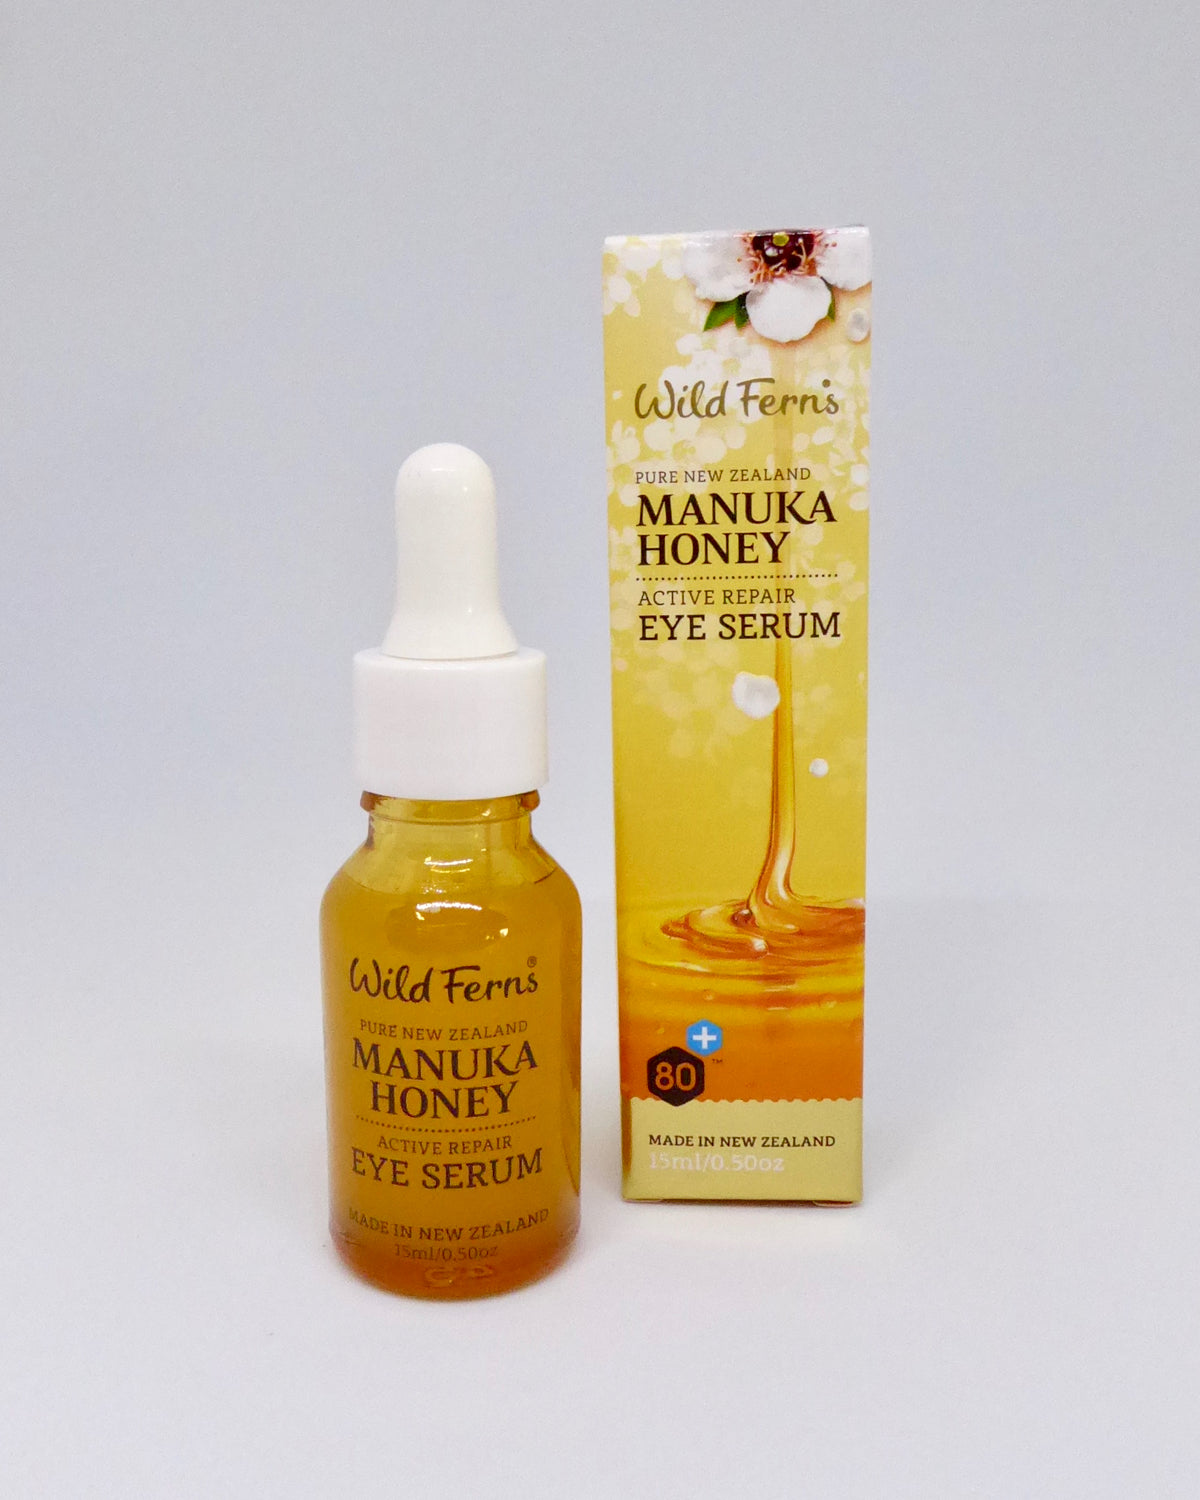 Fantail House, made in New Zealand, NZ made, Wild Ferns, Manuka Honey Active Repair Eye Serum